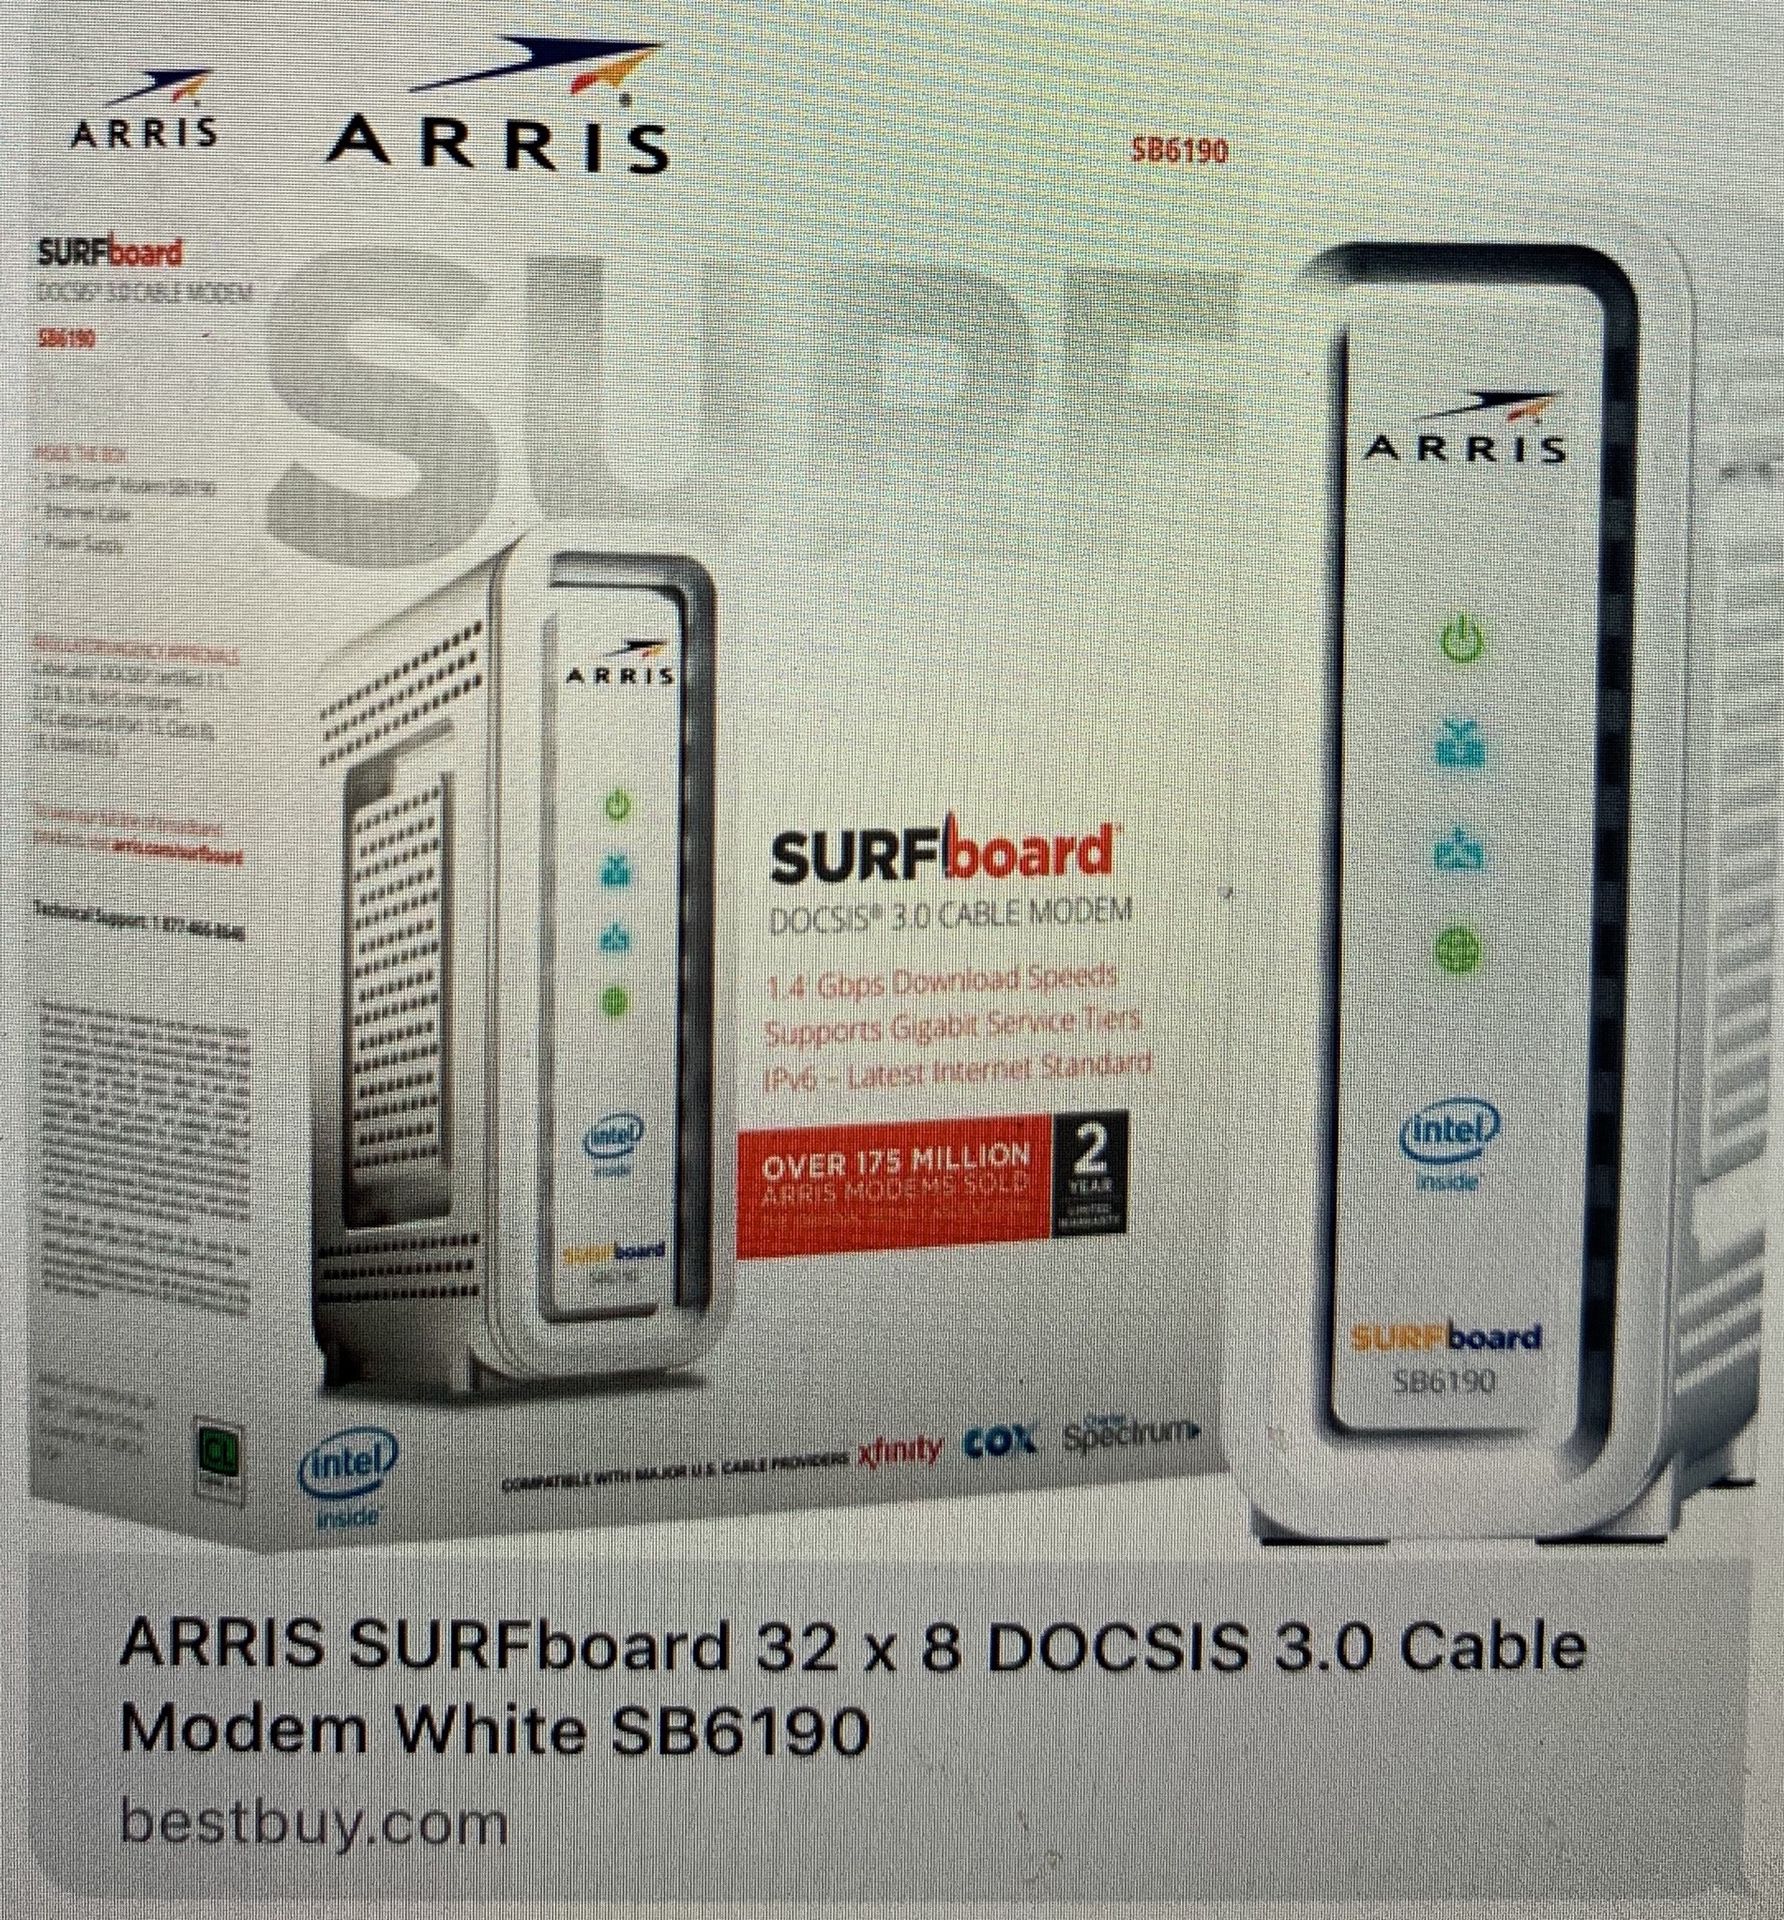 Arris Surfboard Cable Modem - SB6190